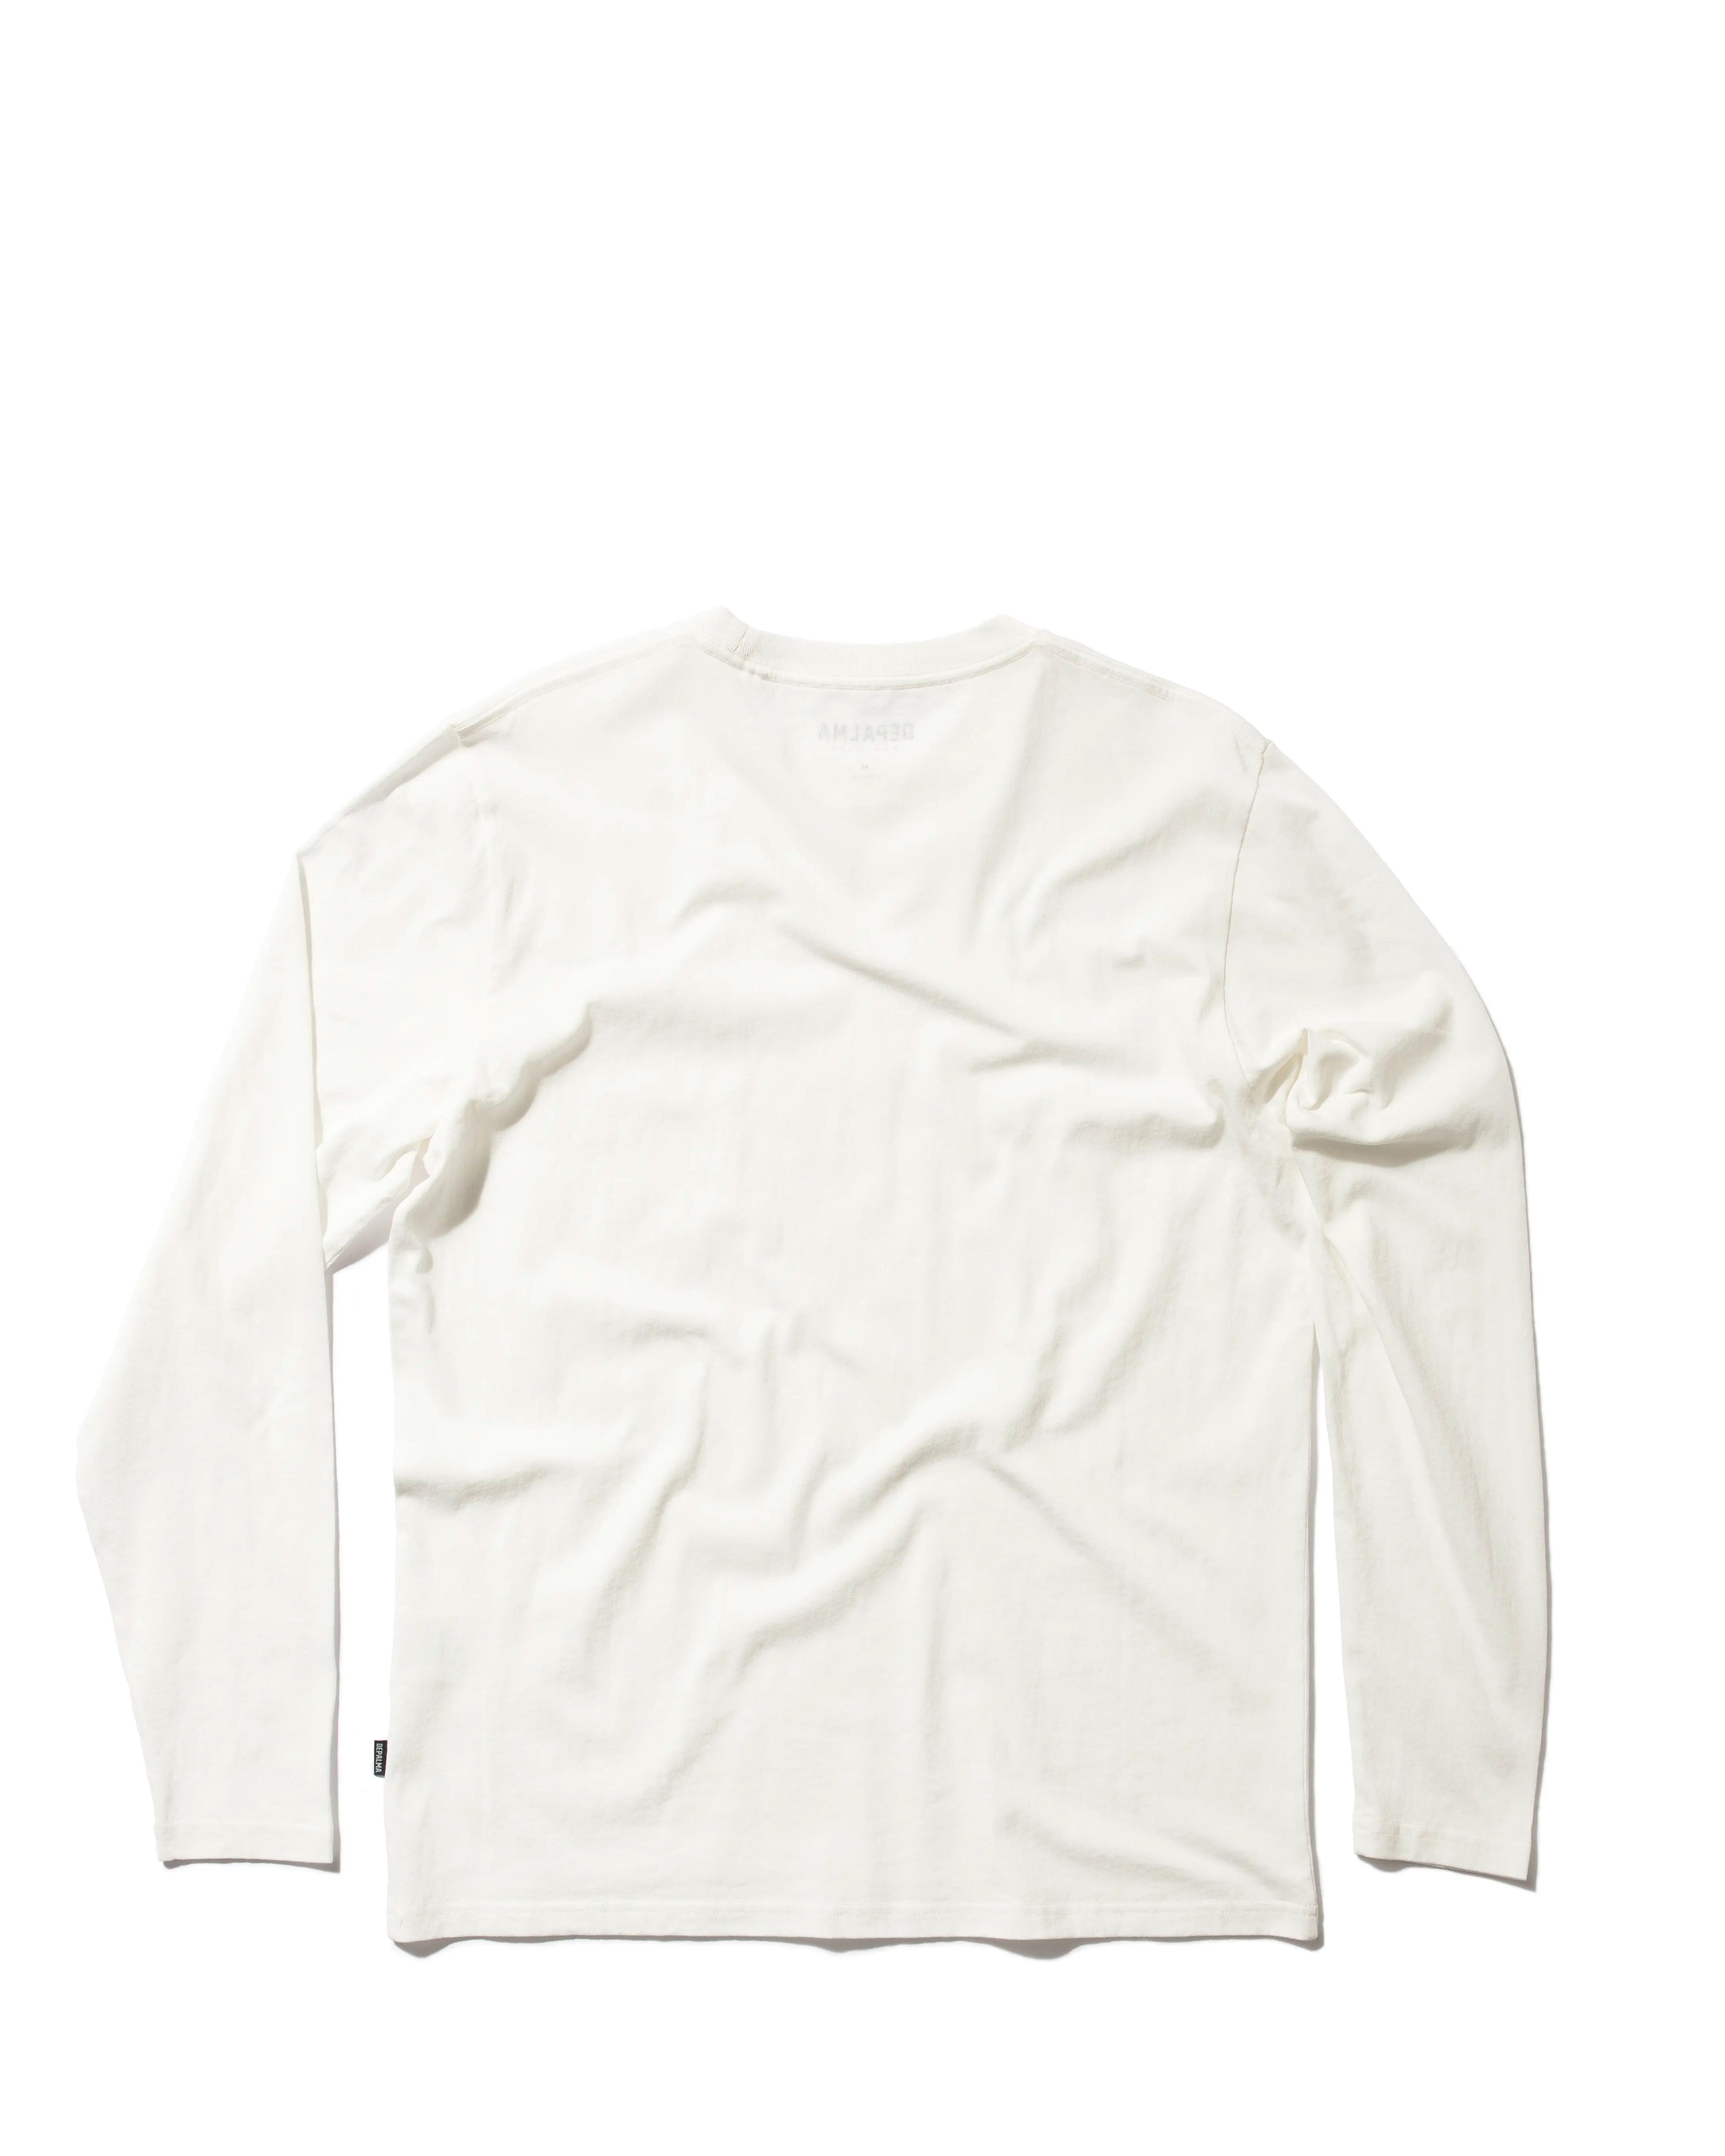 Photo of Profile L/S T-shirt, White